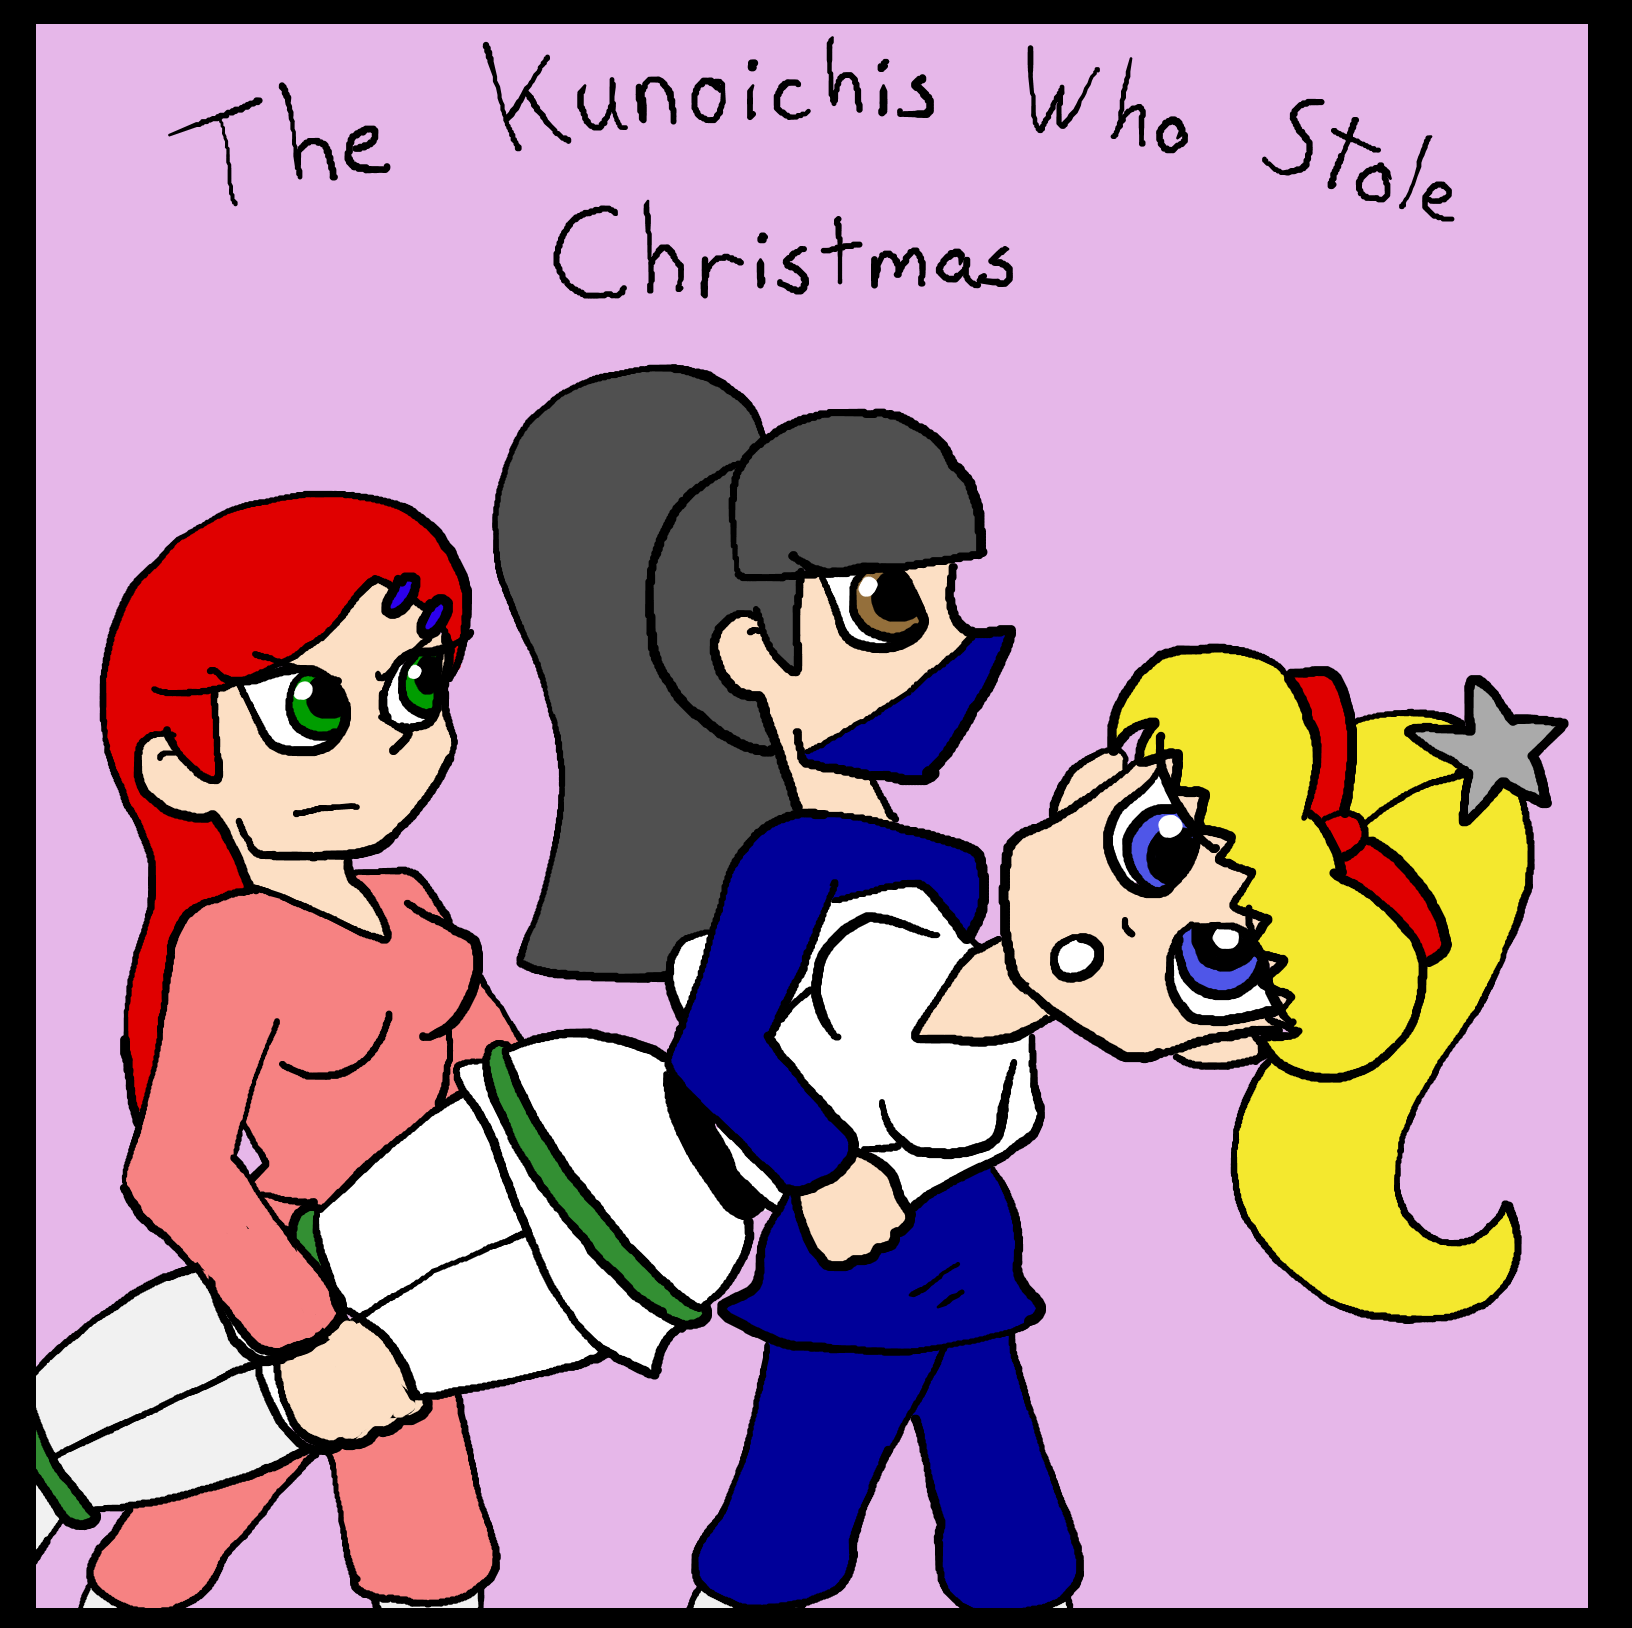 The Kunoichis who Stole Christmas